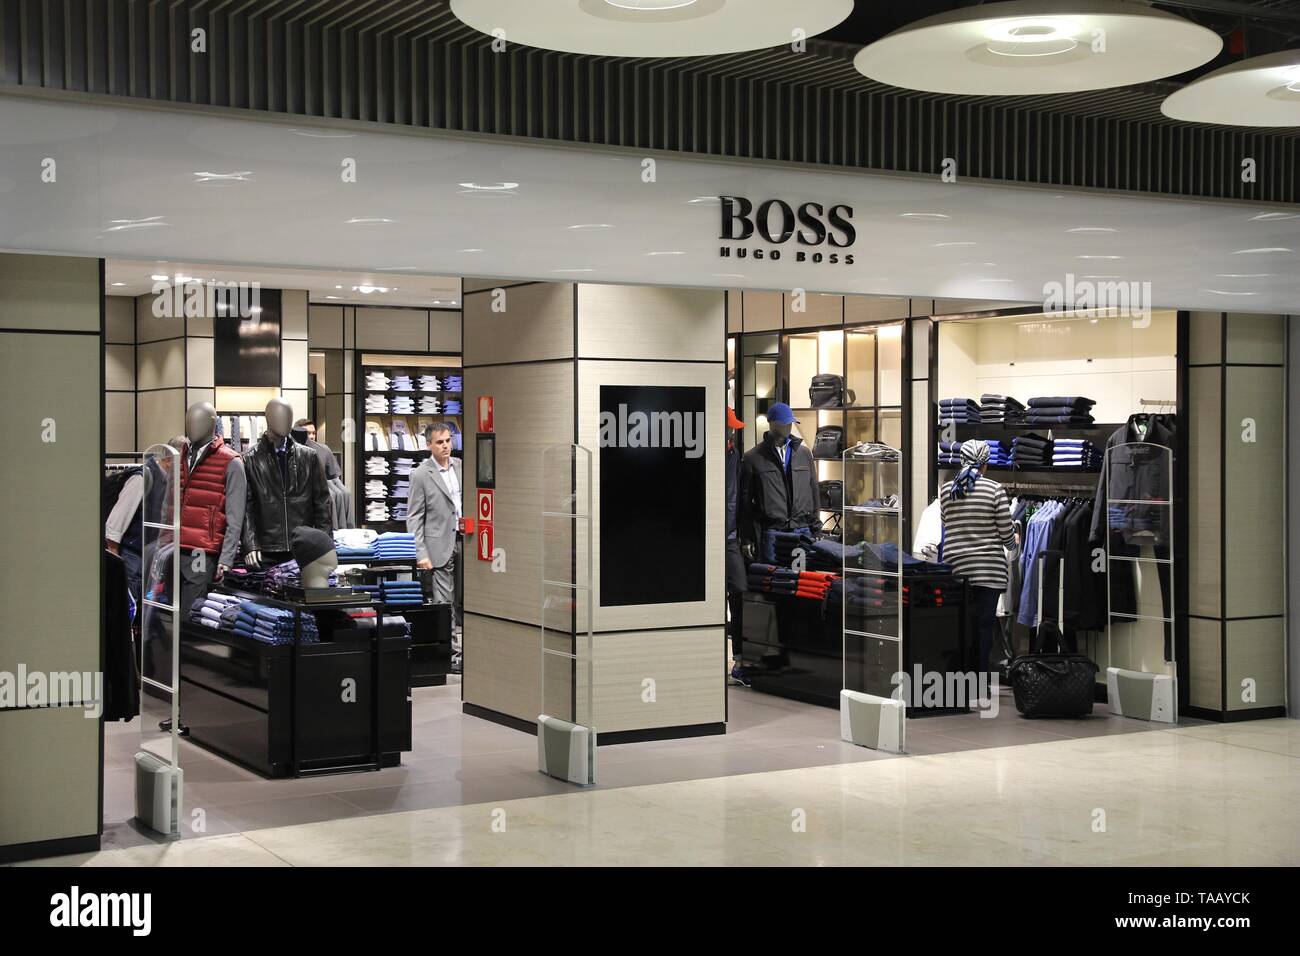 MADRID, Spanien - 20. OKTOBER 2014: Hugo Boss Fashion Store am Flughafen Madrid Barajas T4. Es gibt 63 Shops im Flughafen Terminal 4. Stockfoto